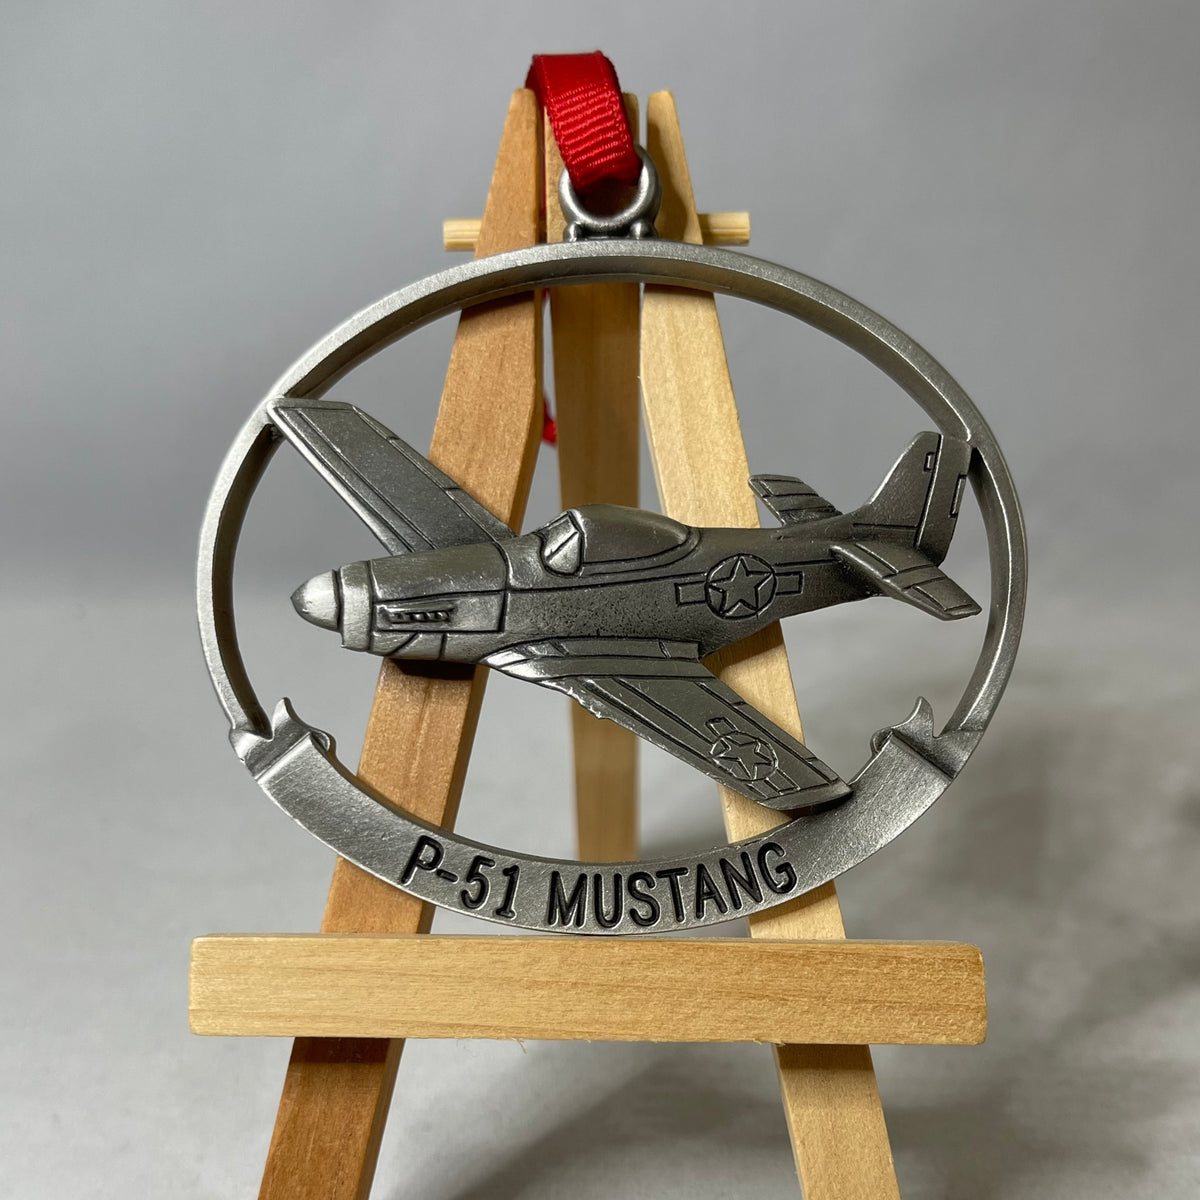 P51 Mustang Ornament